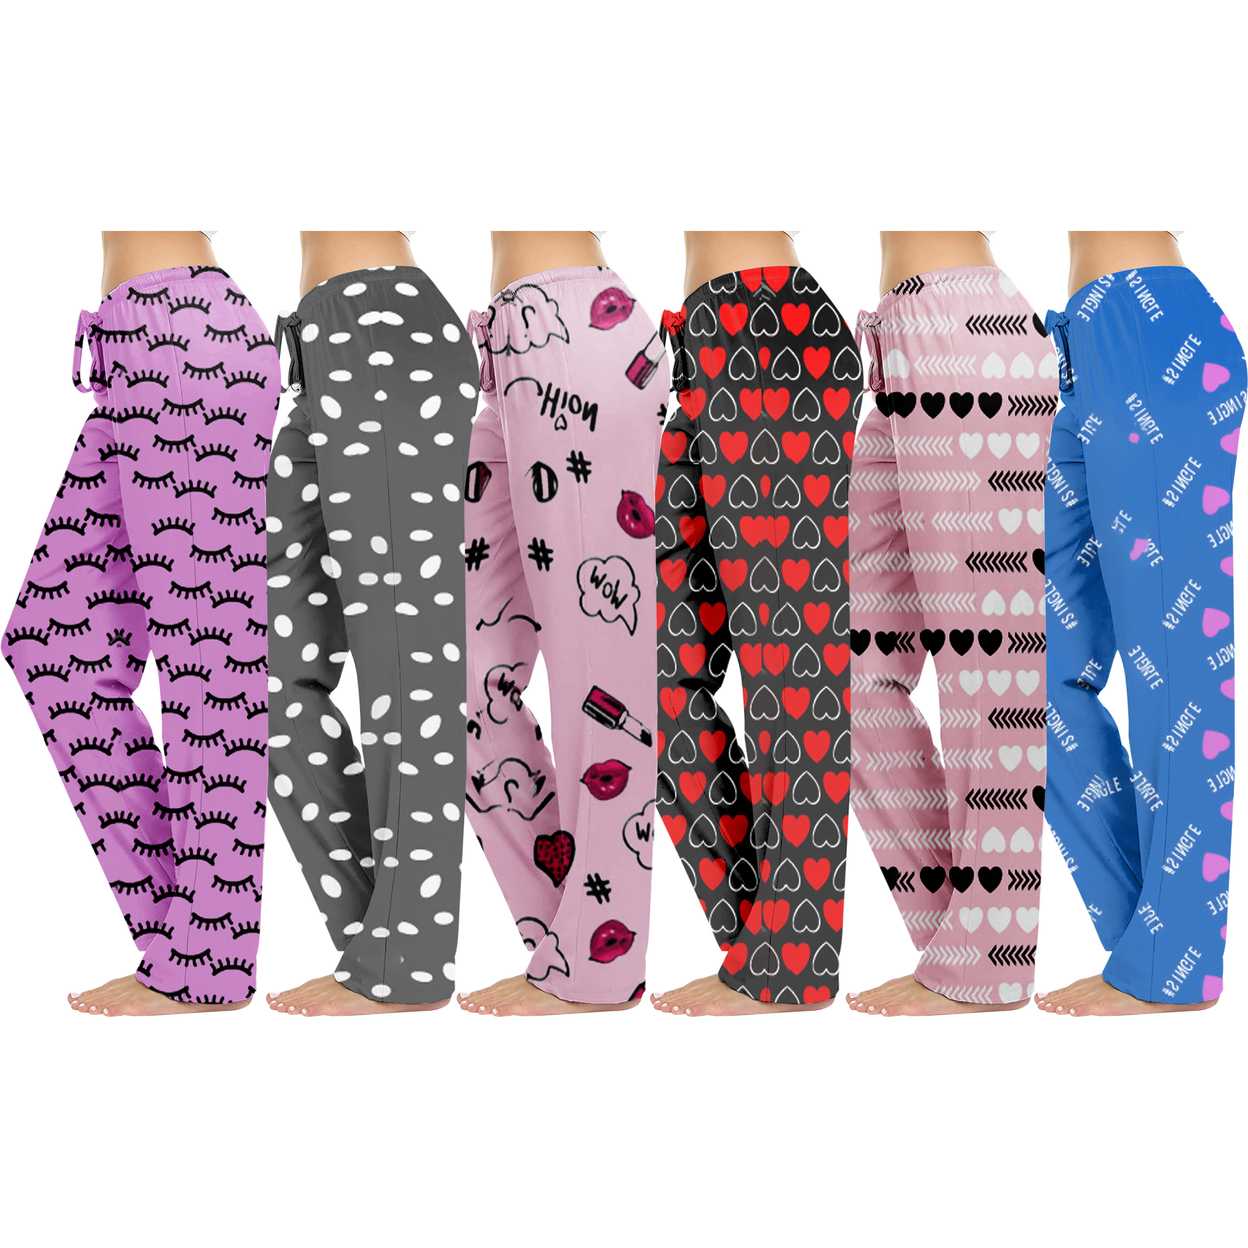 5-Pack: Women's Casual Fun Printed Lightweight Lounge Terry Knit Pajama Bottom Pants - Medium, Shapes